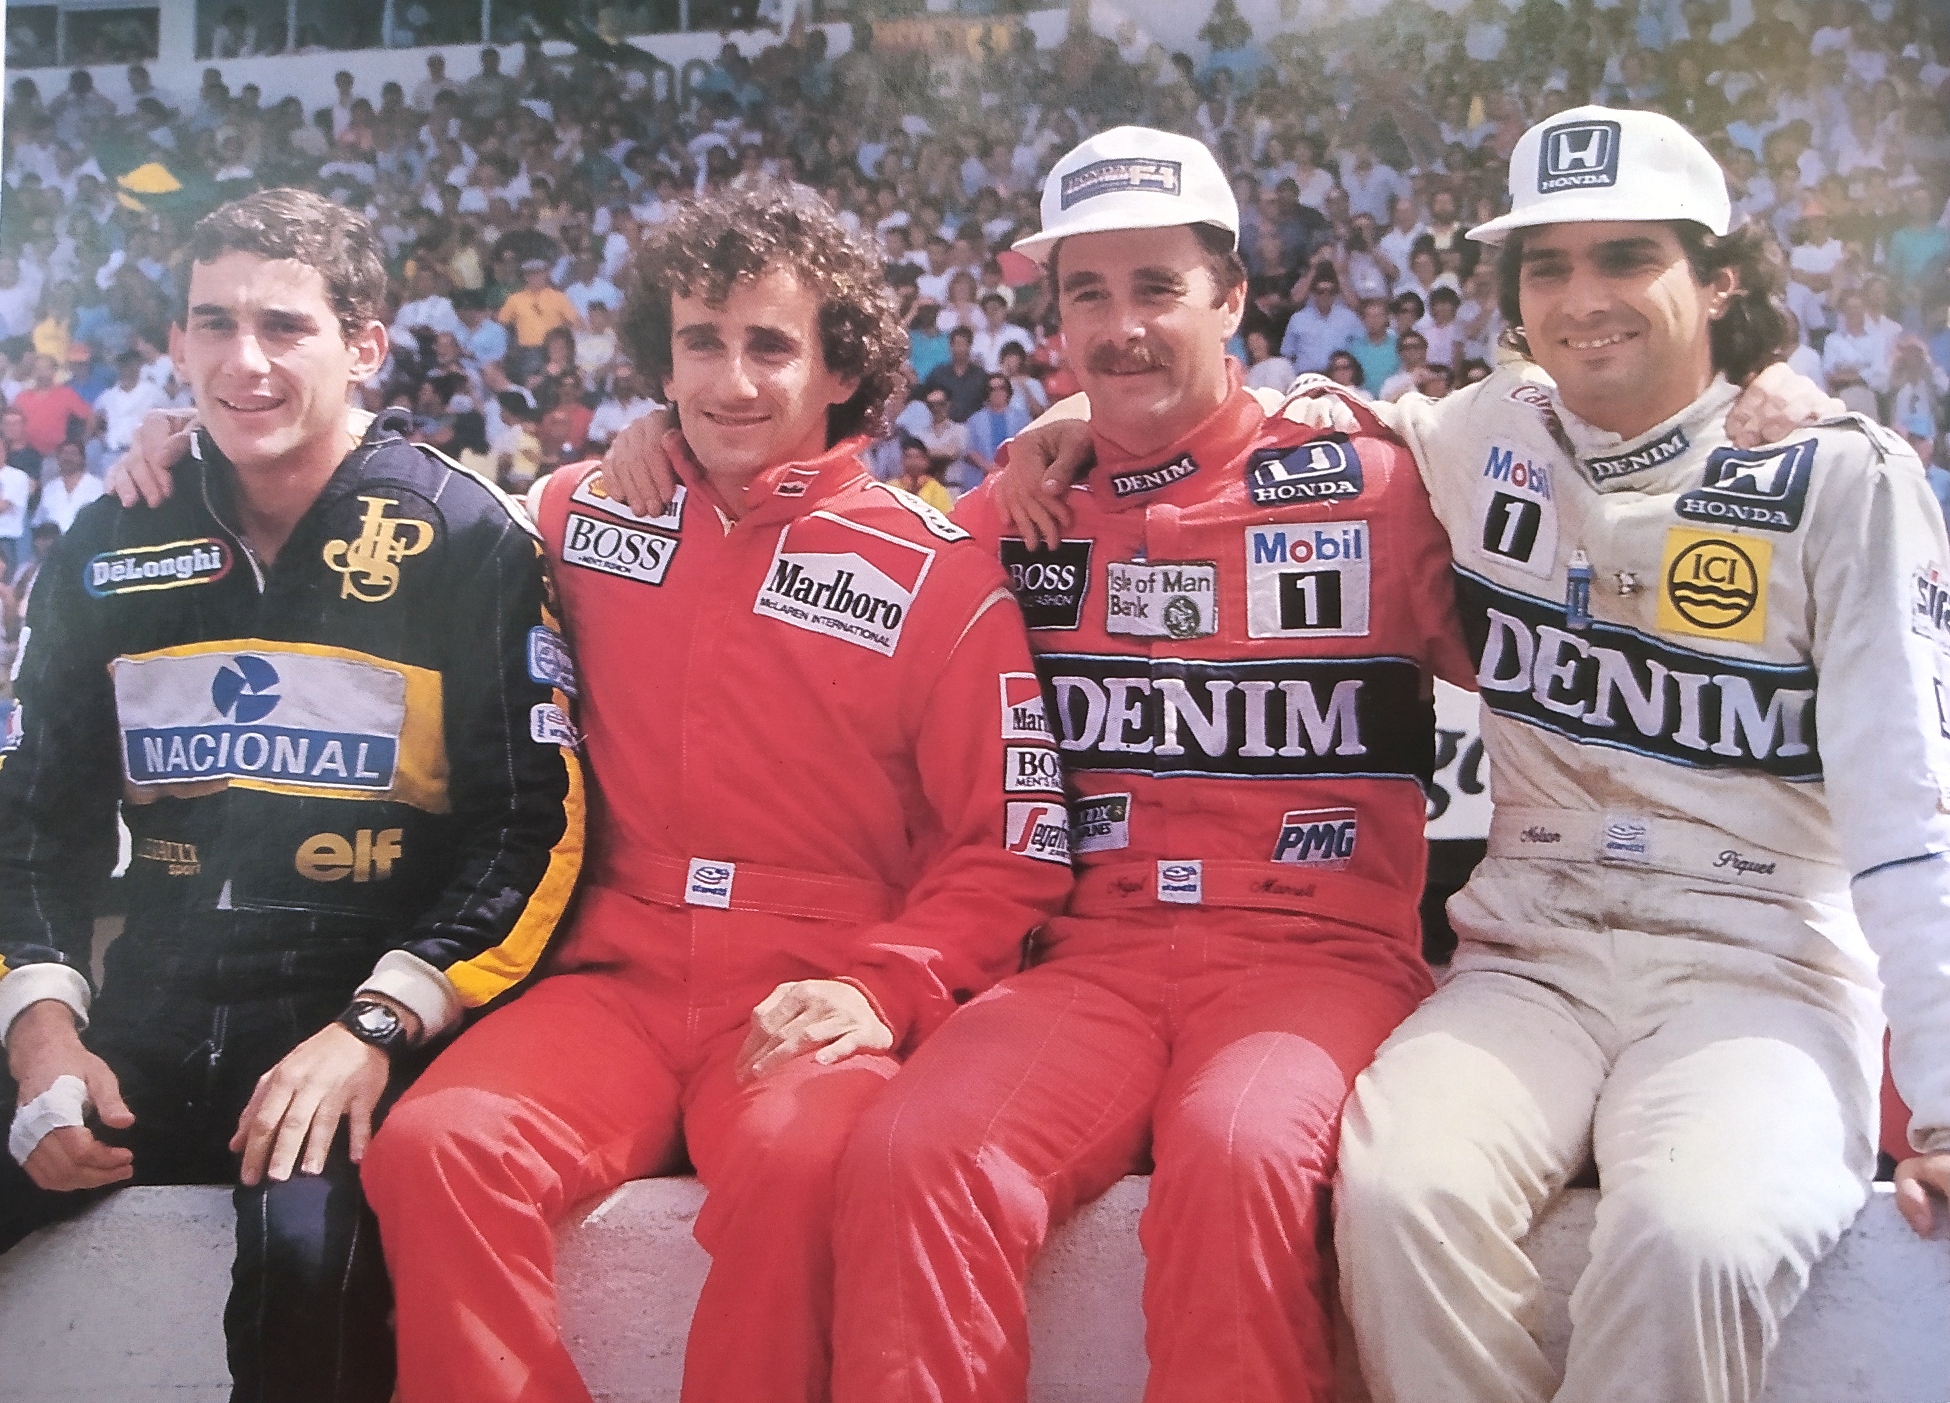 E Senna Prost Manell Piquet